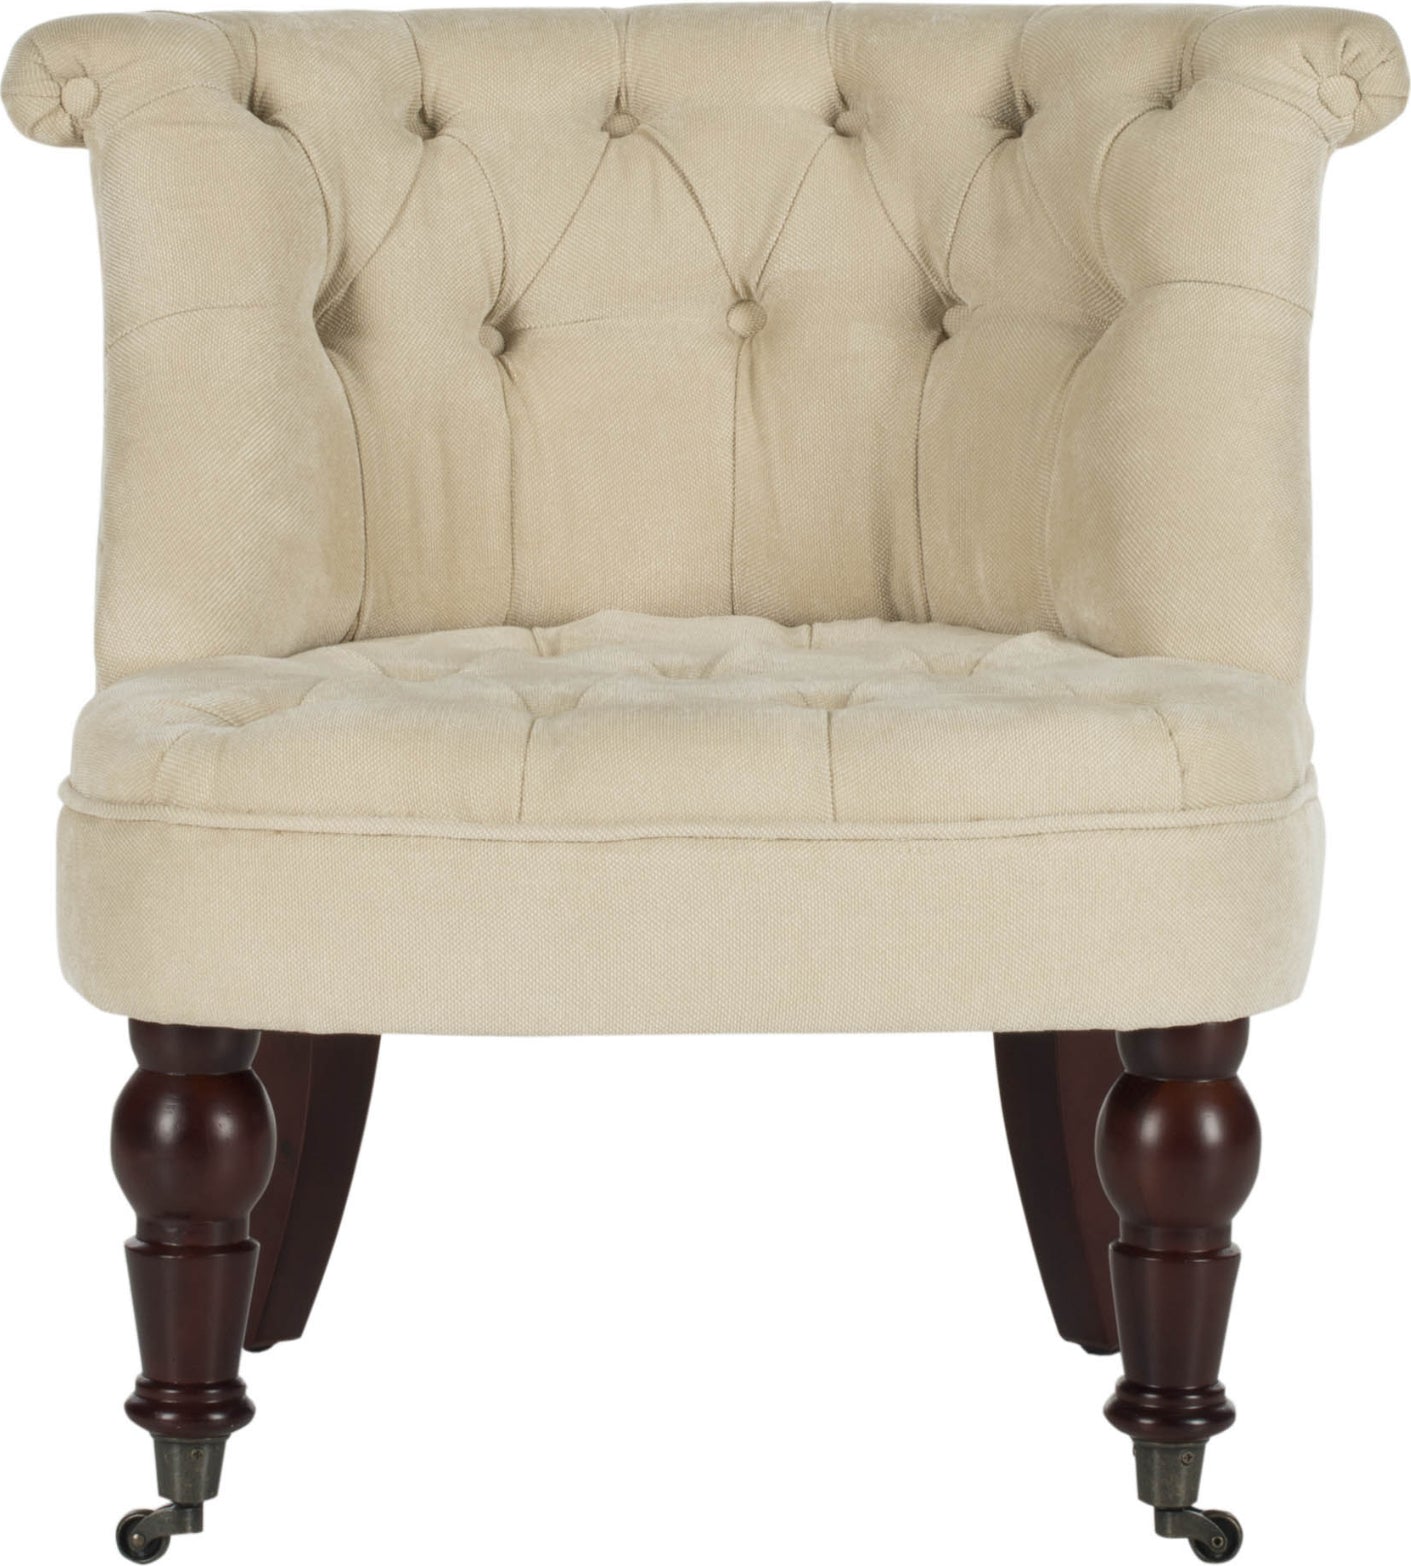 Safavieh Carlin Tufted Chair Natural Cream and Cherry Mahogany Furniture main image